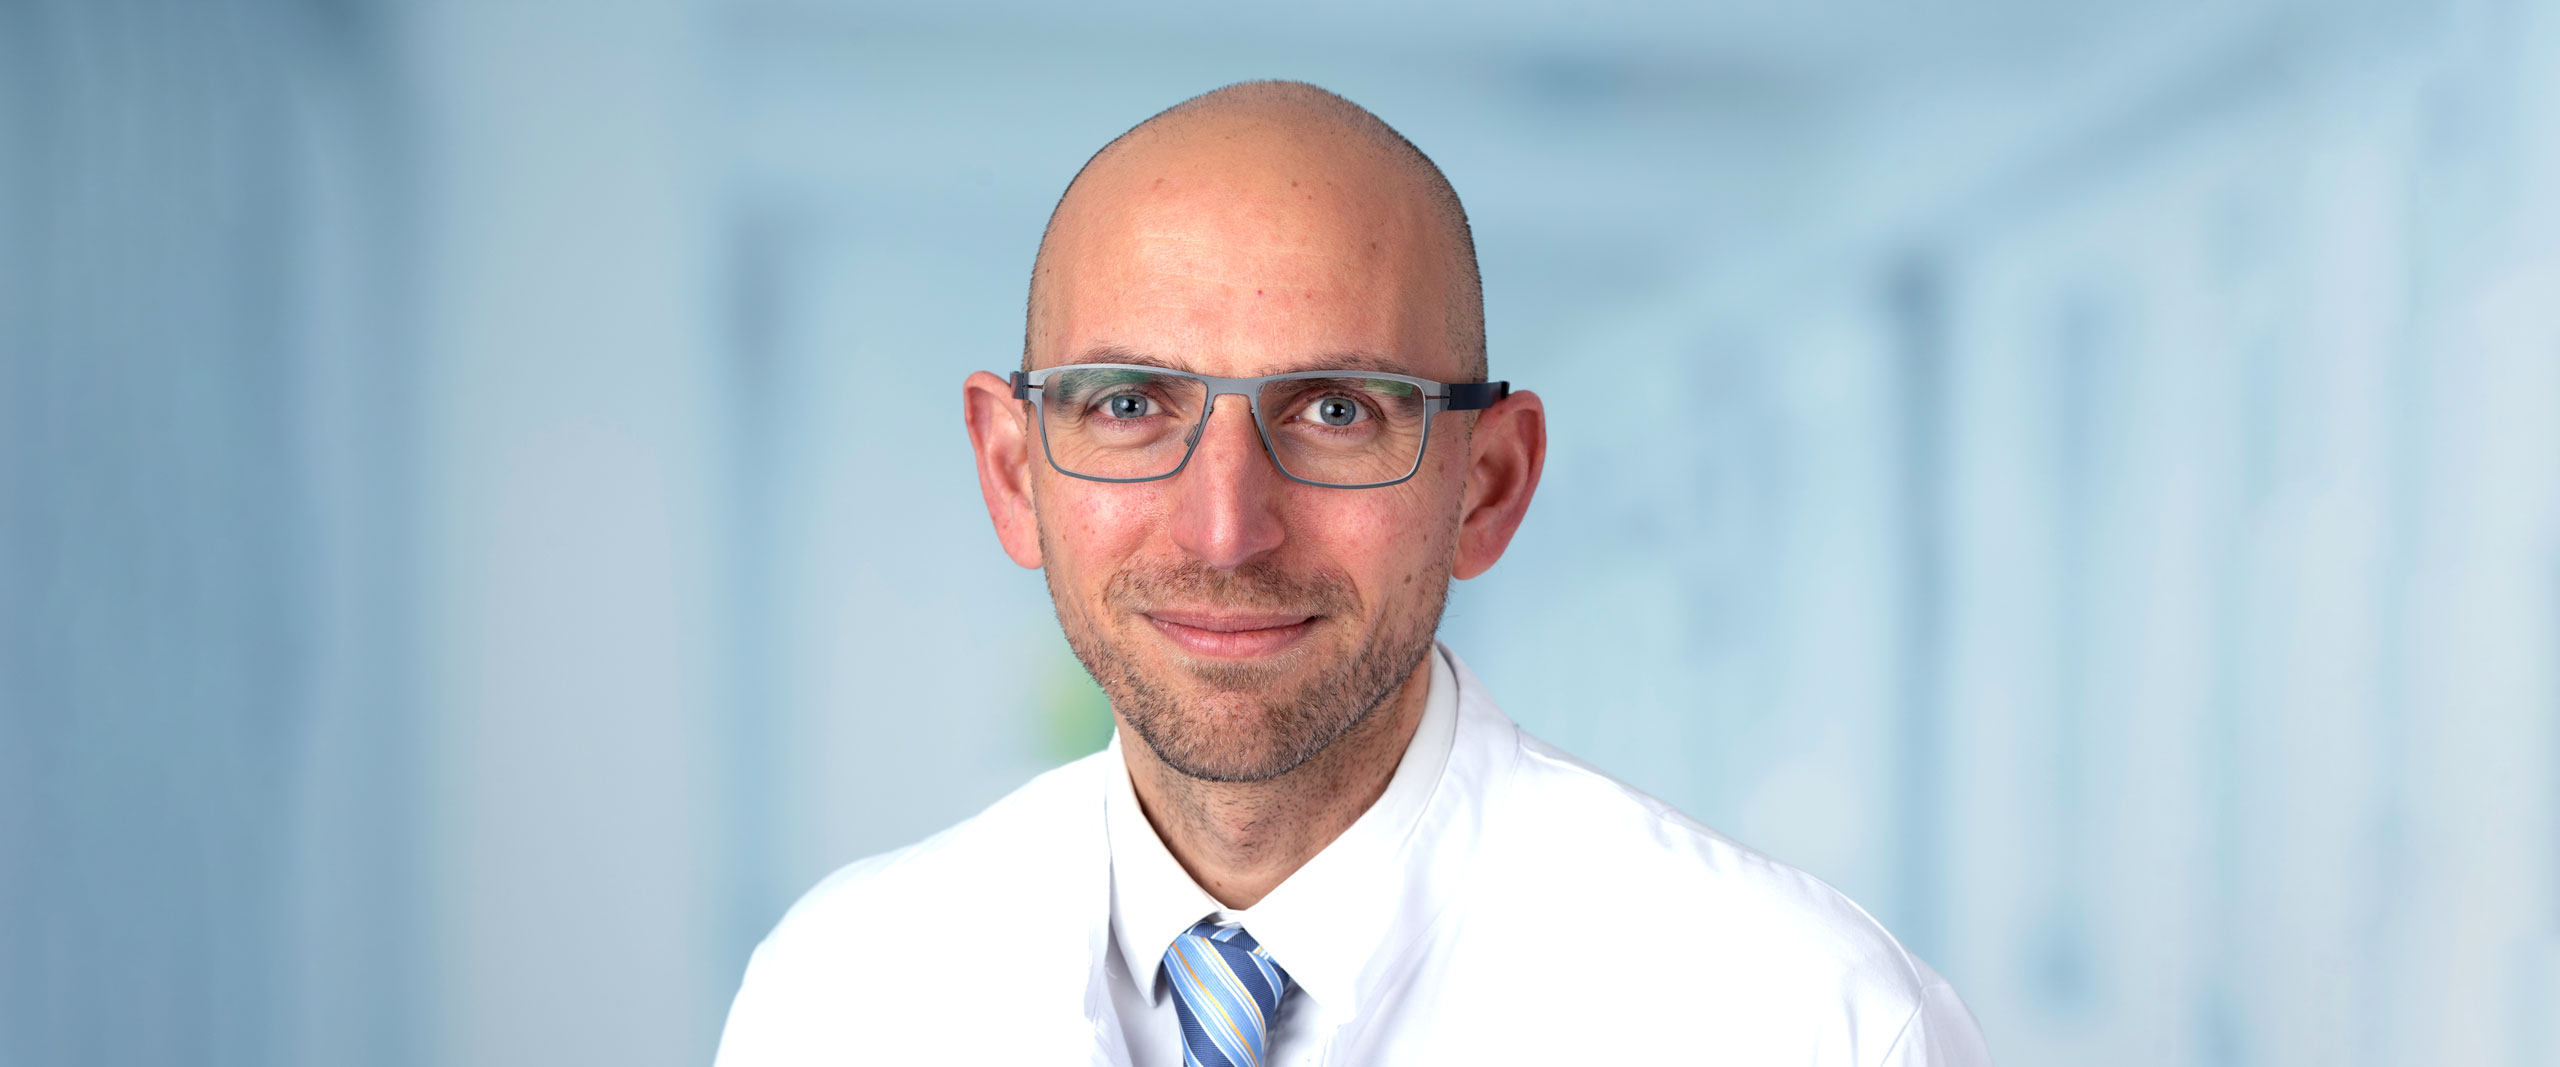 Neuer Glaukomexperte am Universitätsklinikum Bonn